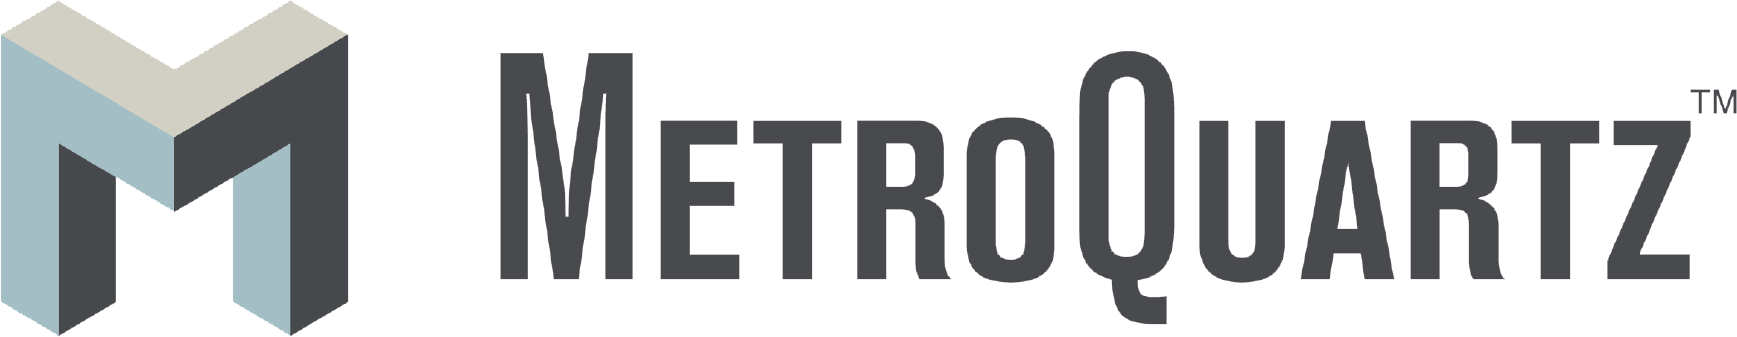 metroQuartz logo.png